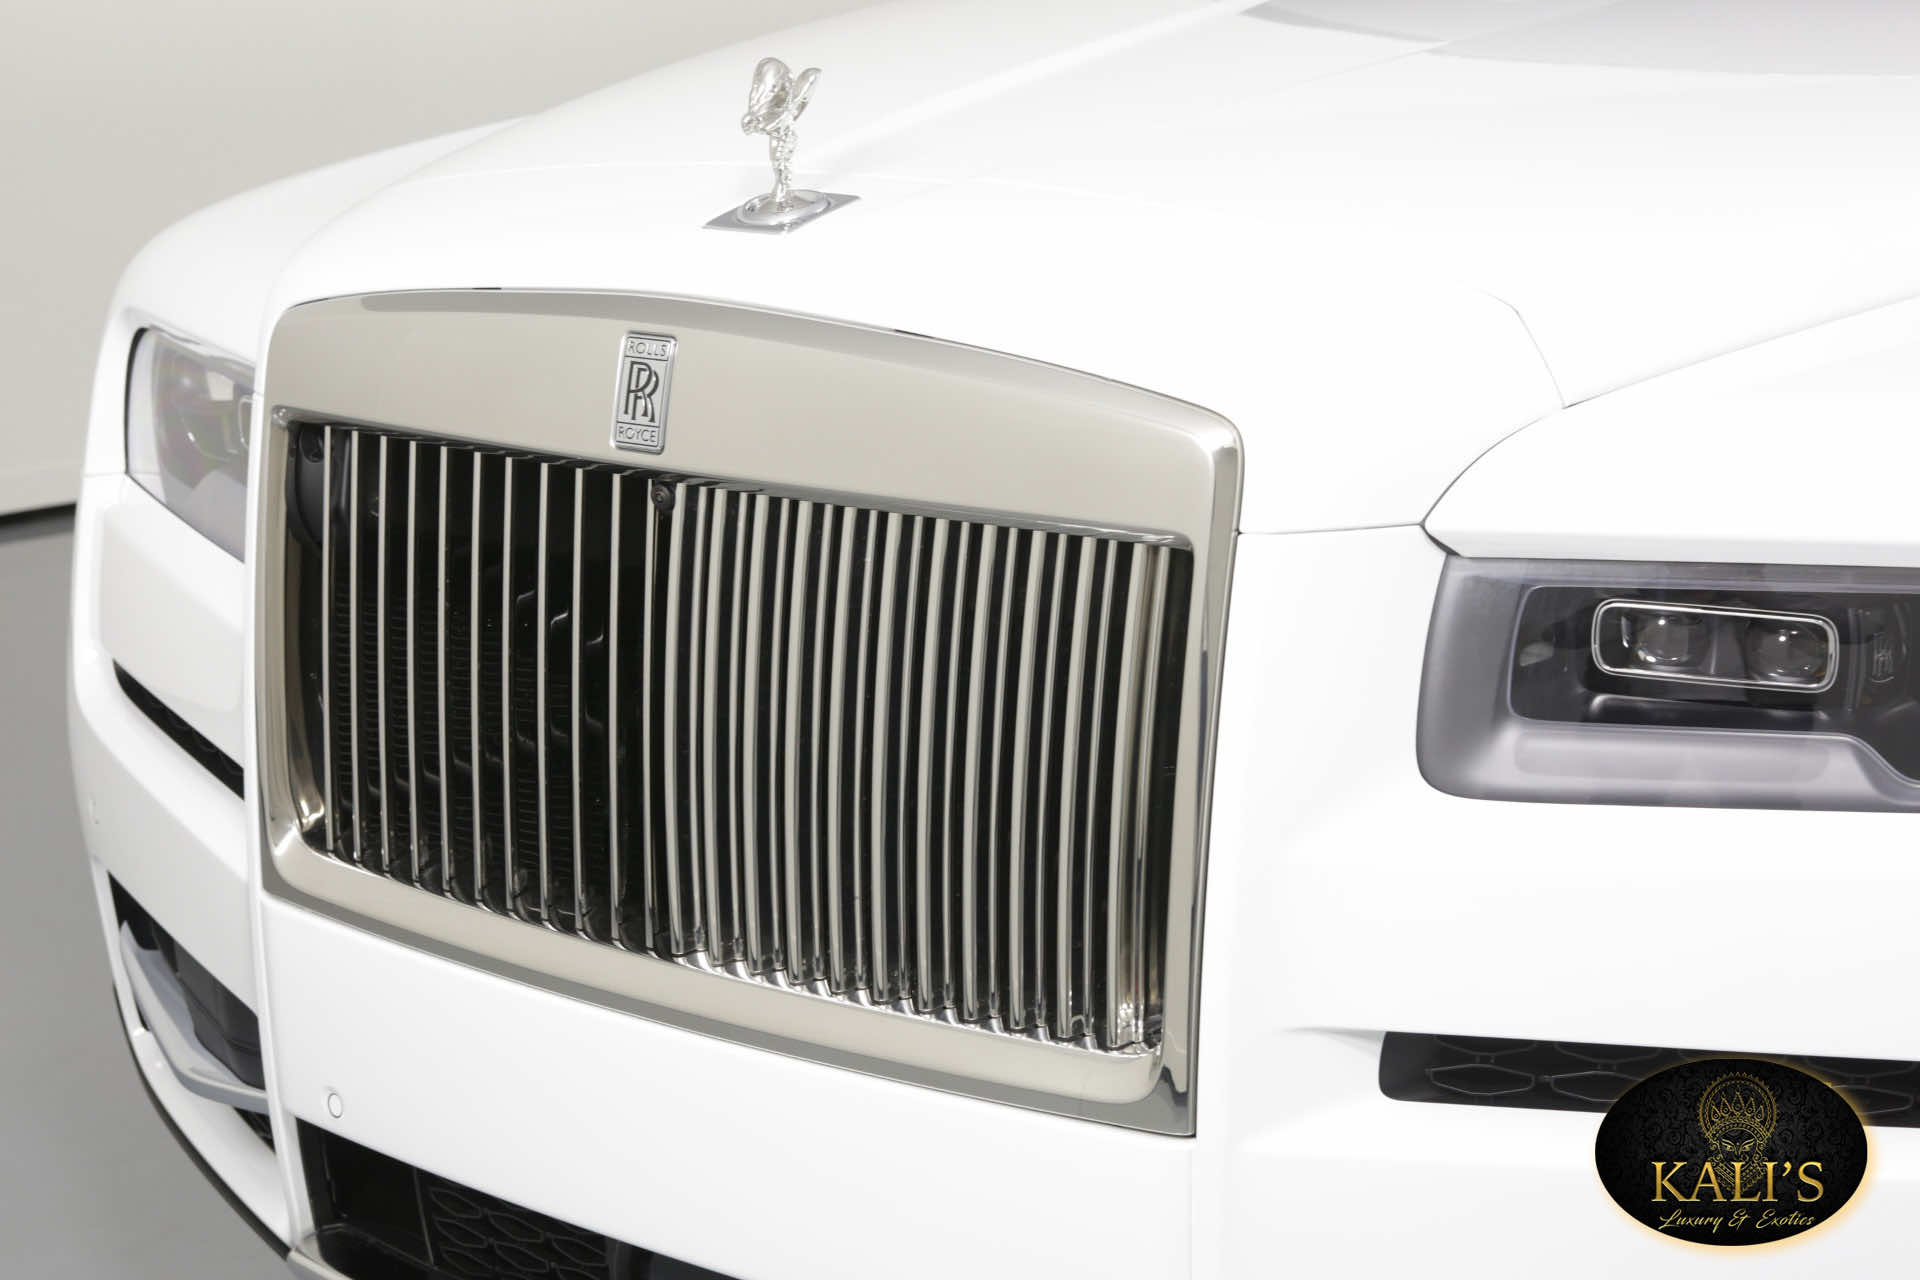 Rolls Royce exotic car rental in Nashville